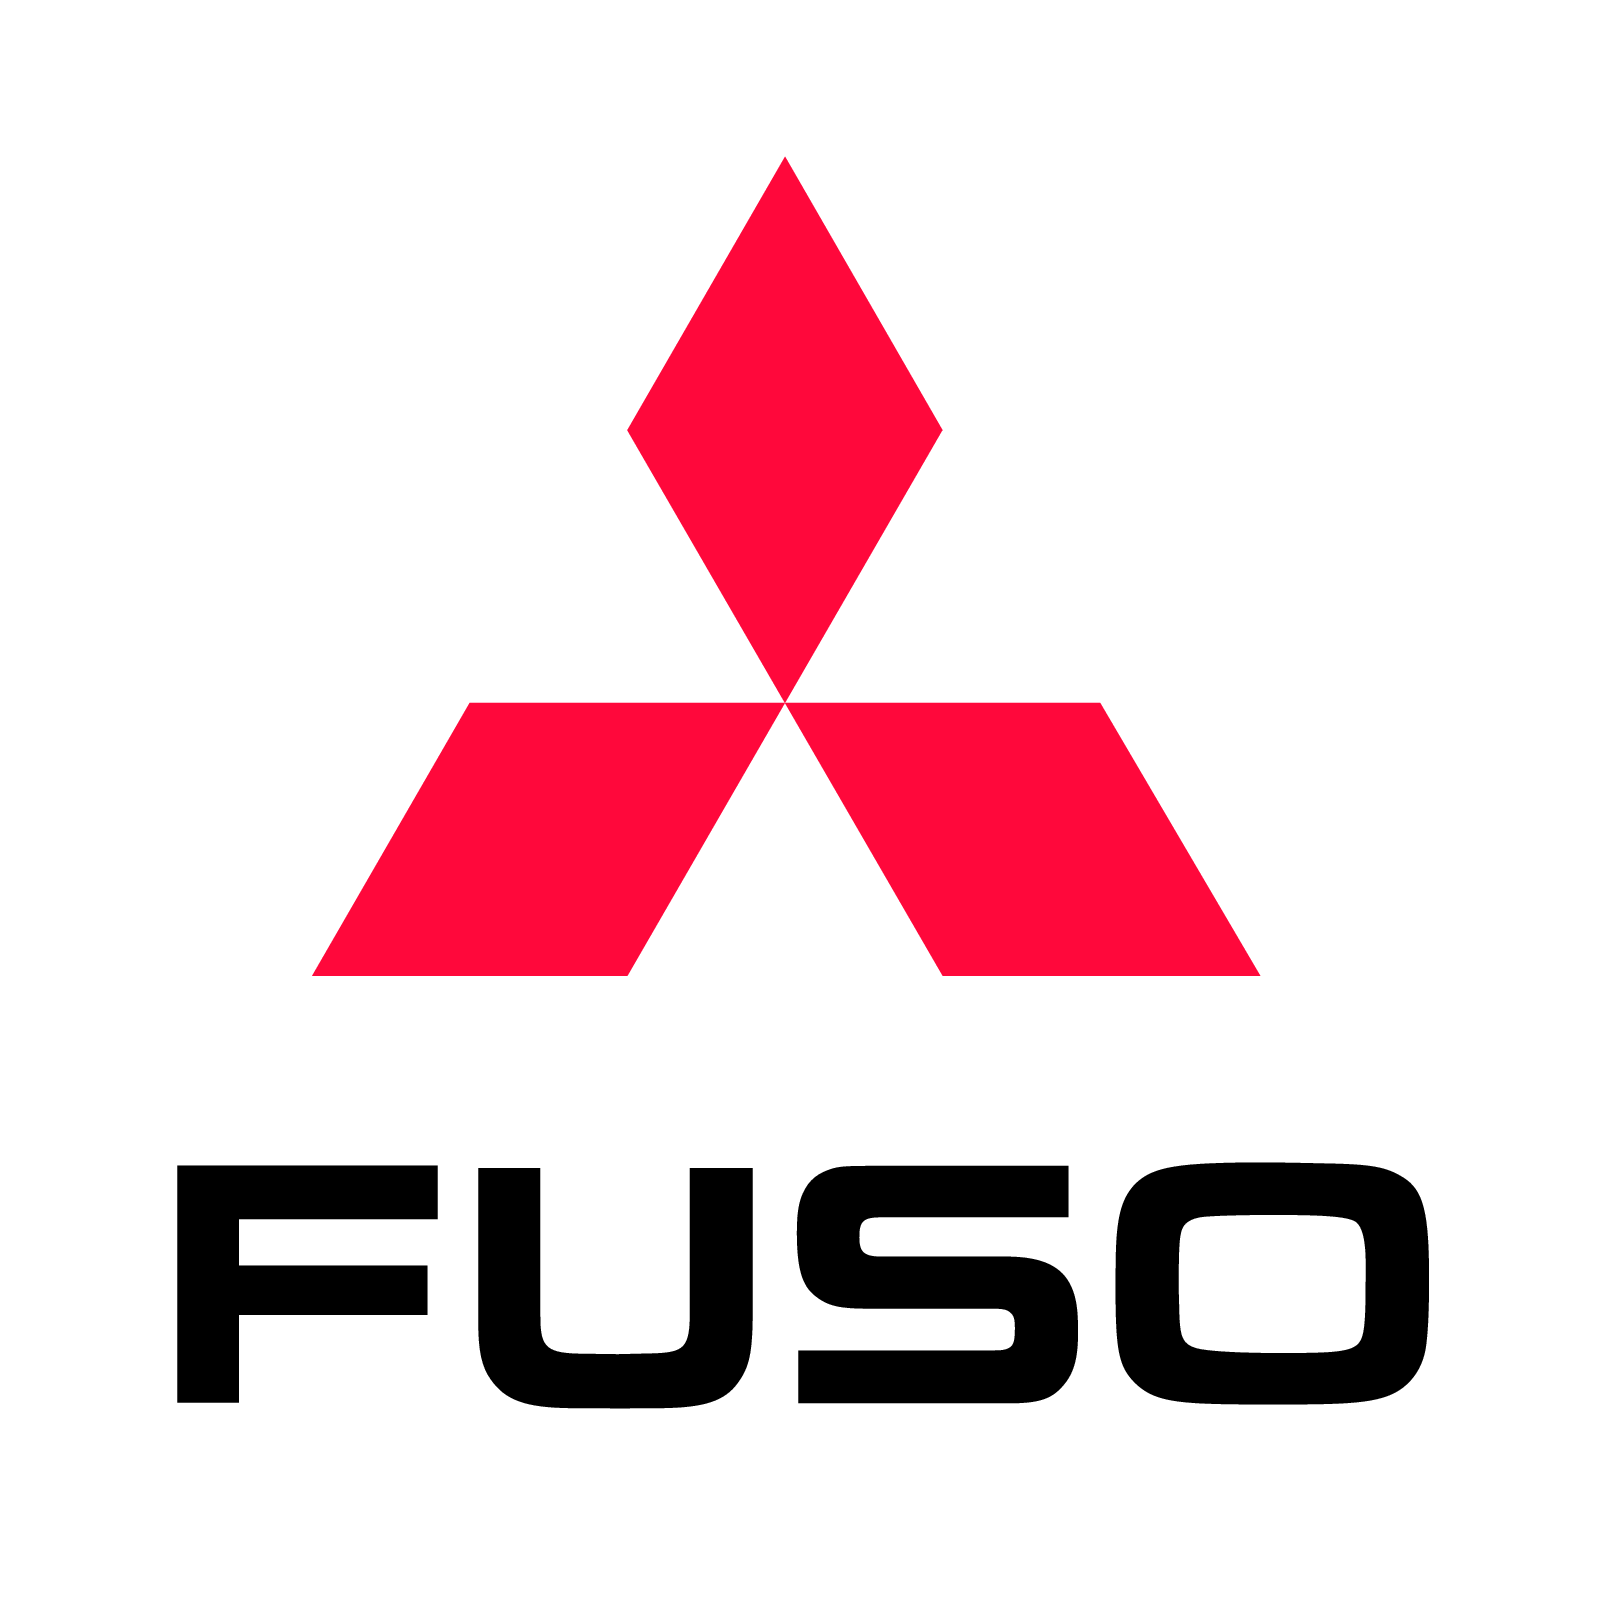 FUSO® logo